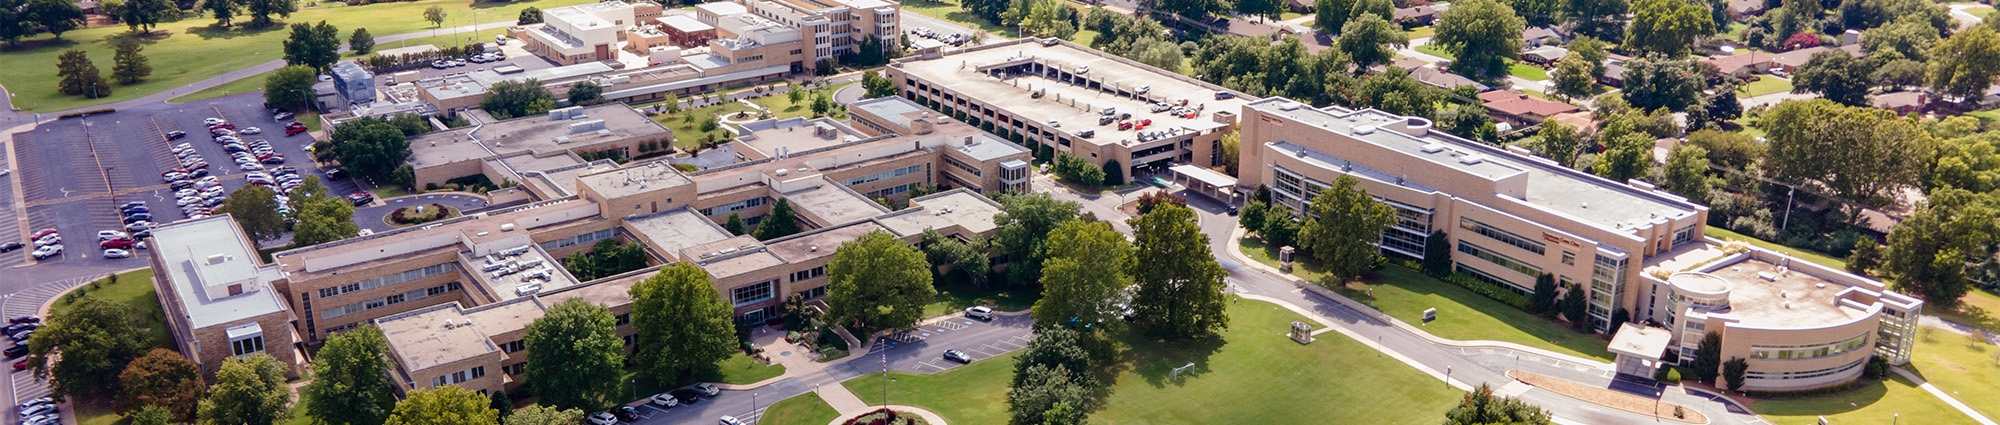 Aerial photo of OU-Tulsa campus